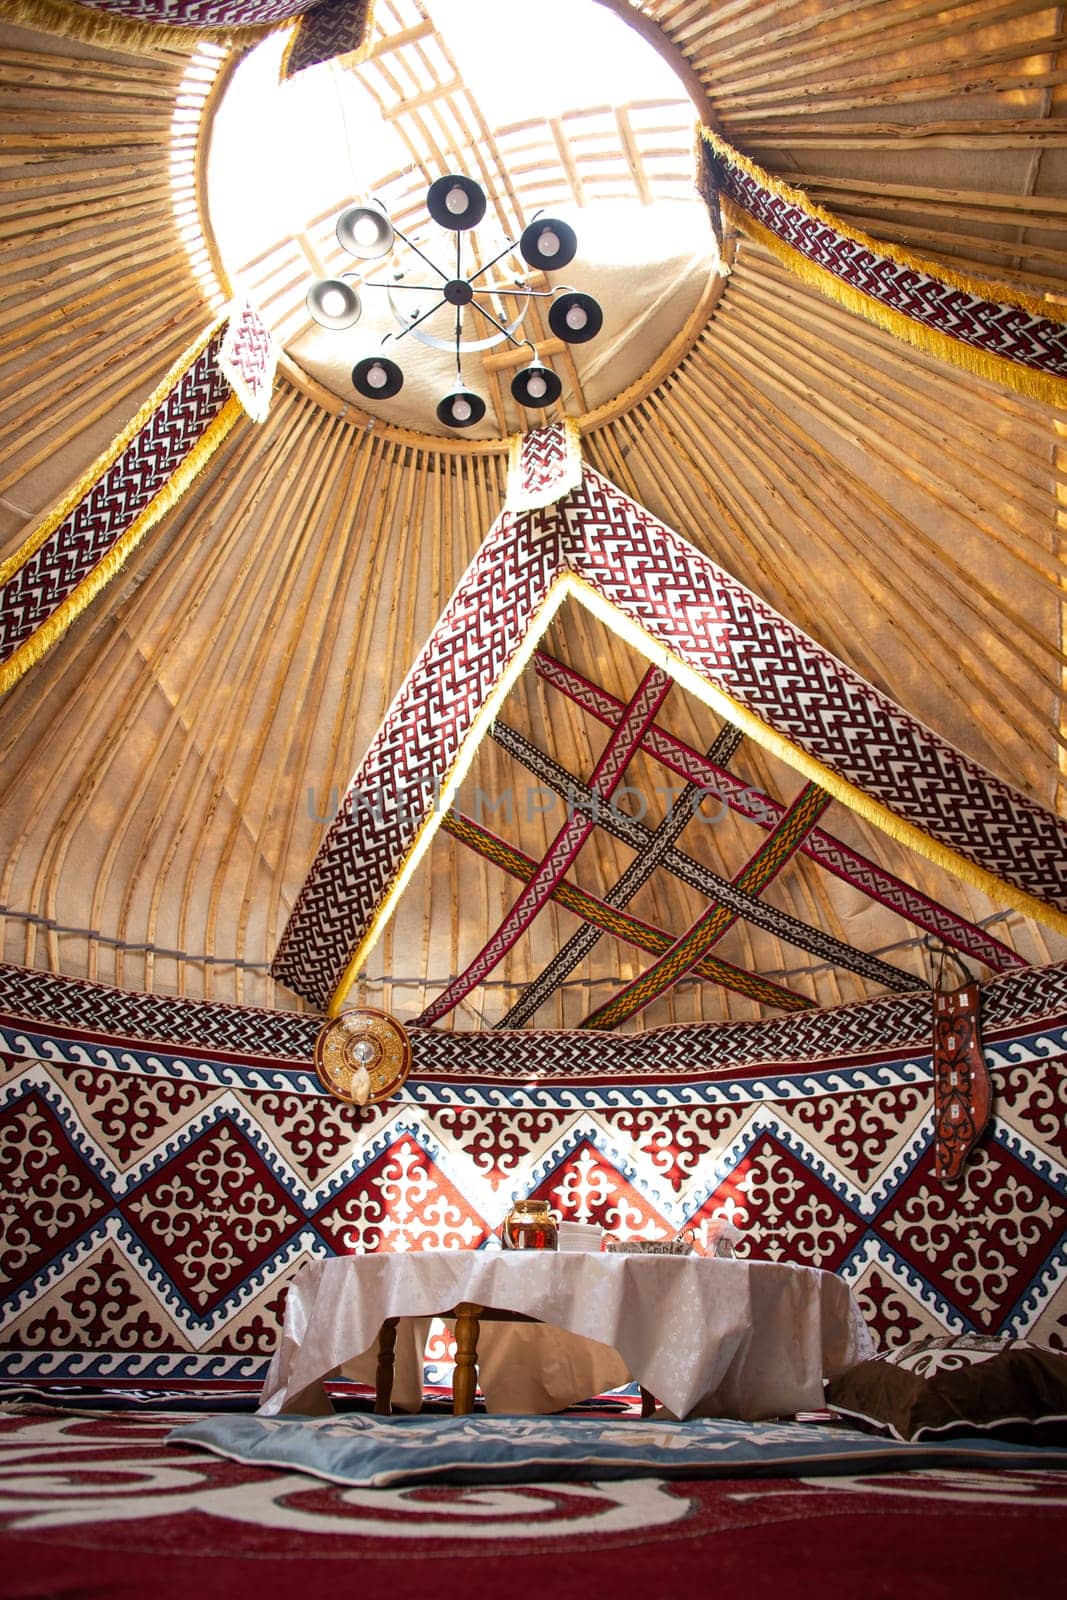 Kazak yurt interior with traditional felt carpets and furniture by Pukhovskiy